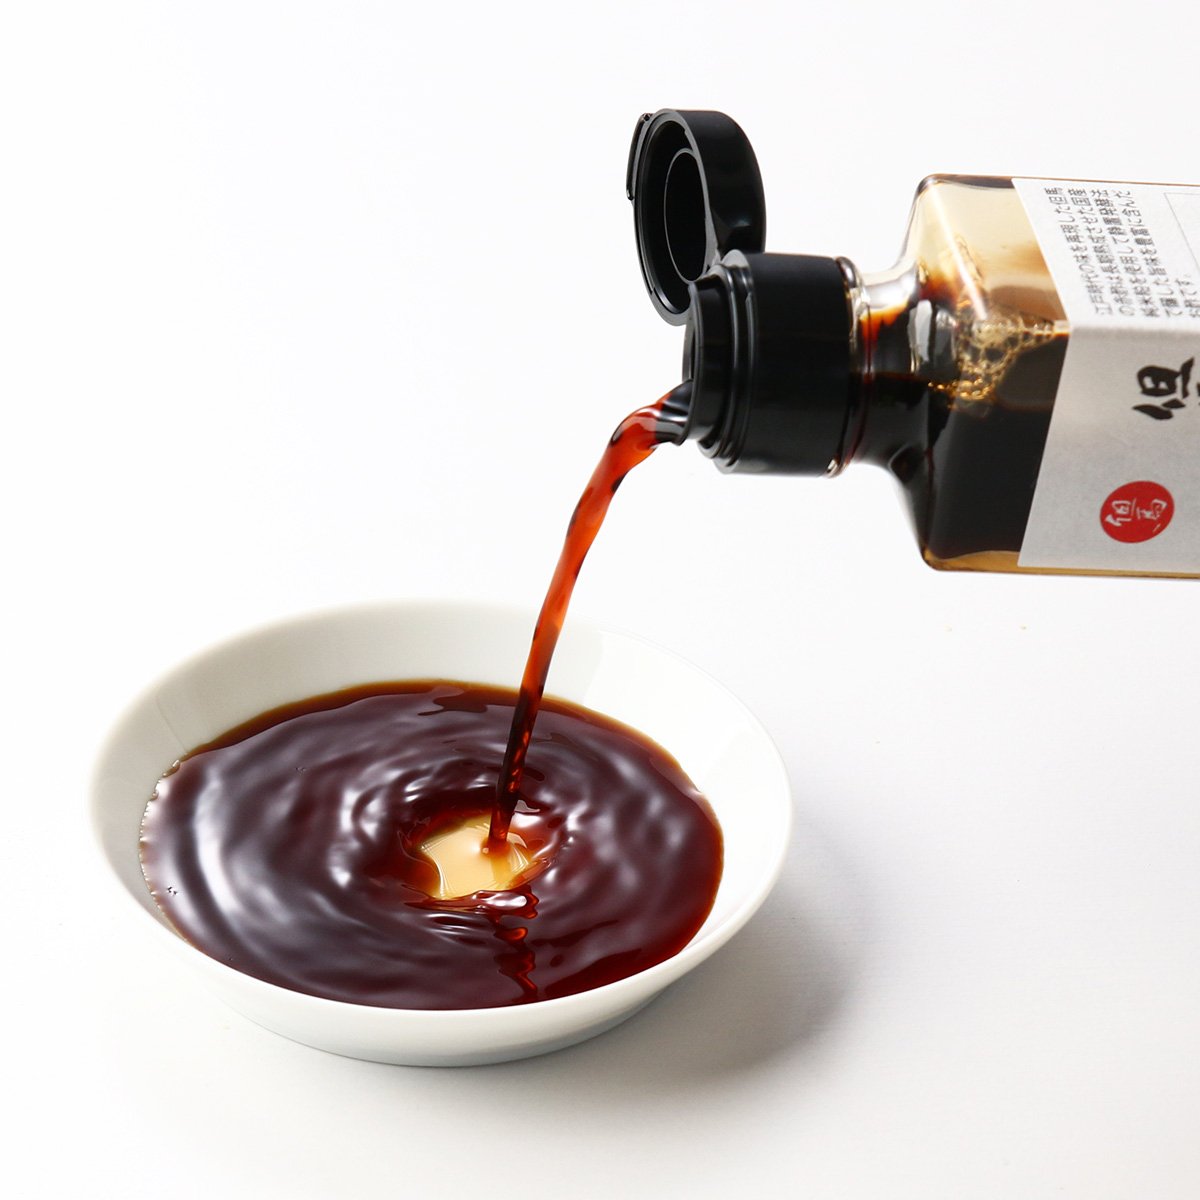 Tajima Jozo Akazu Japanese Red Vinegar 200ml